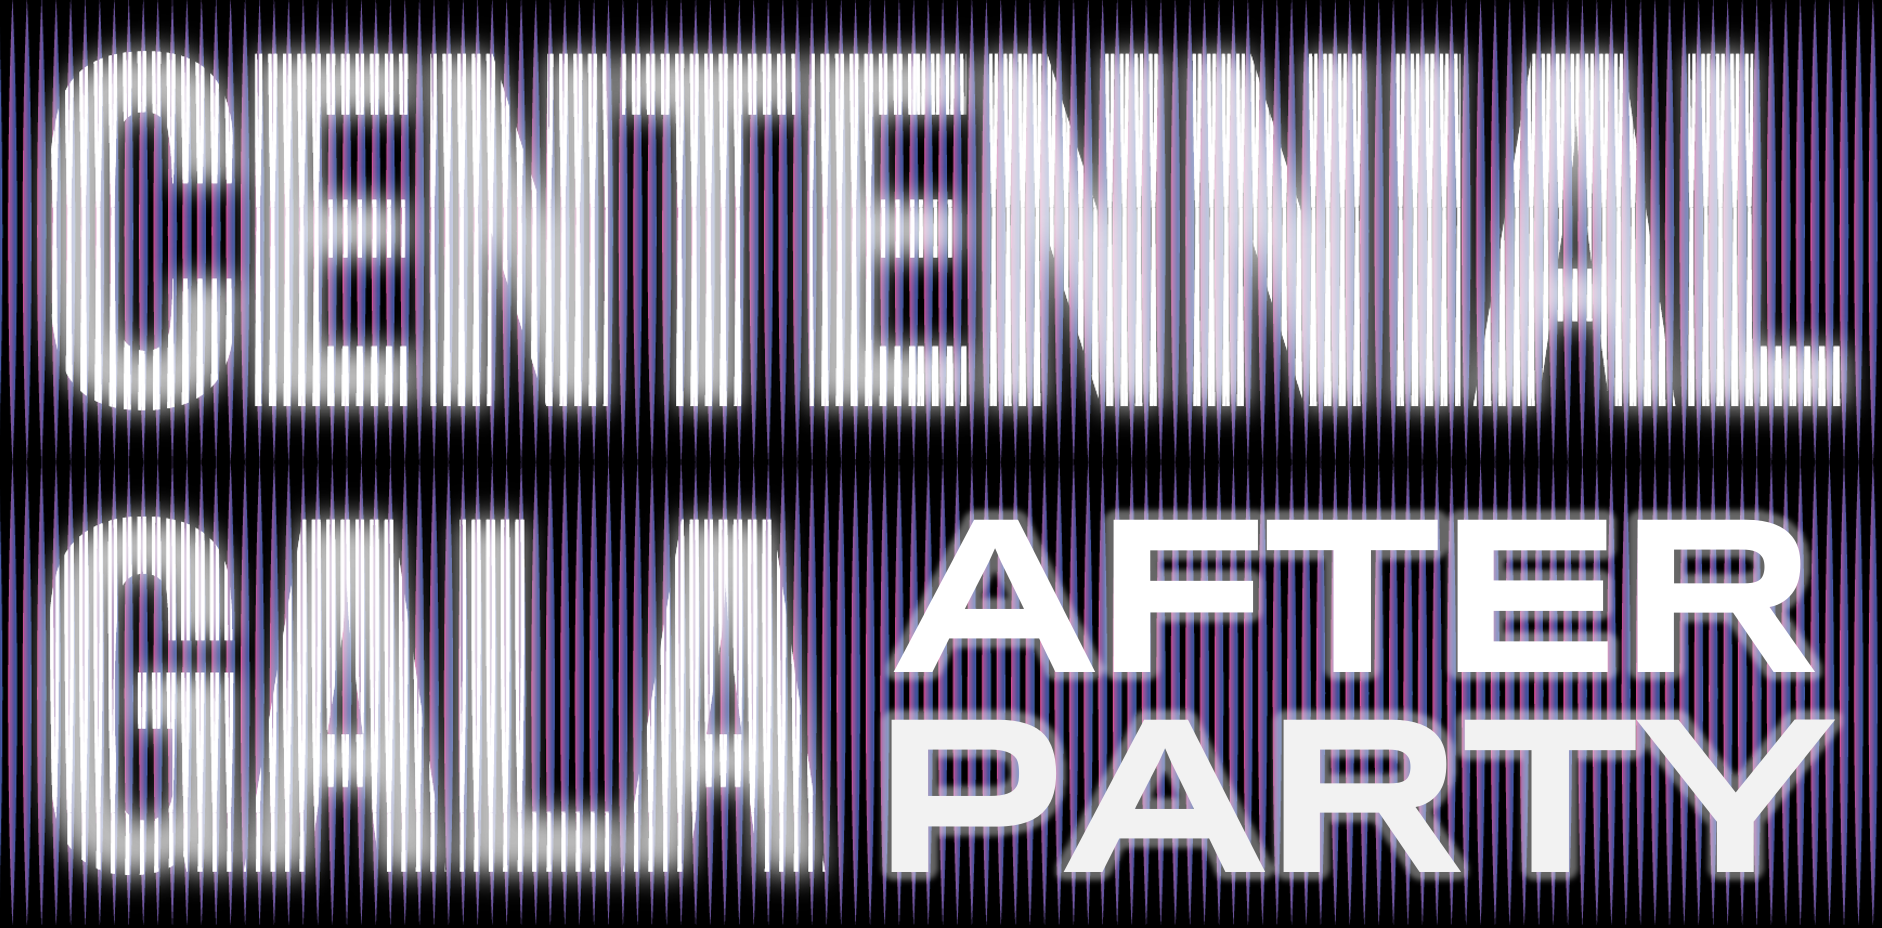 Gala Centenario: After Party.